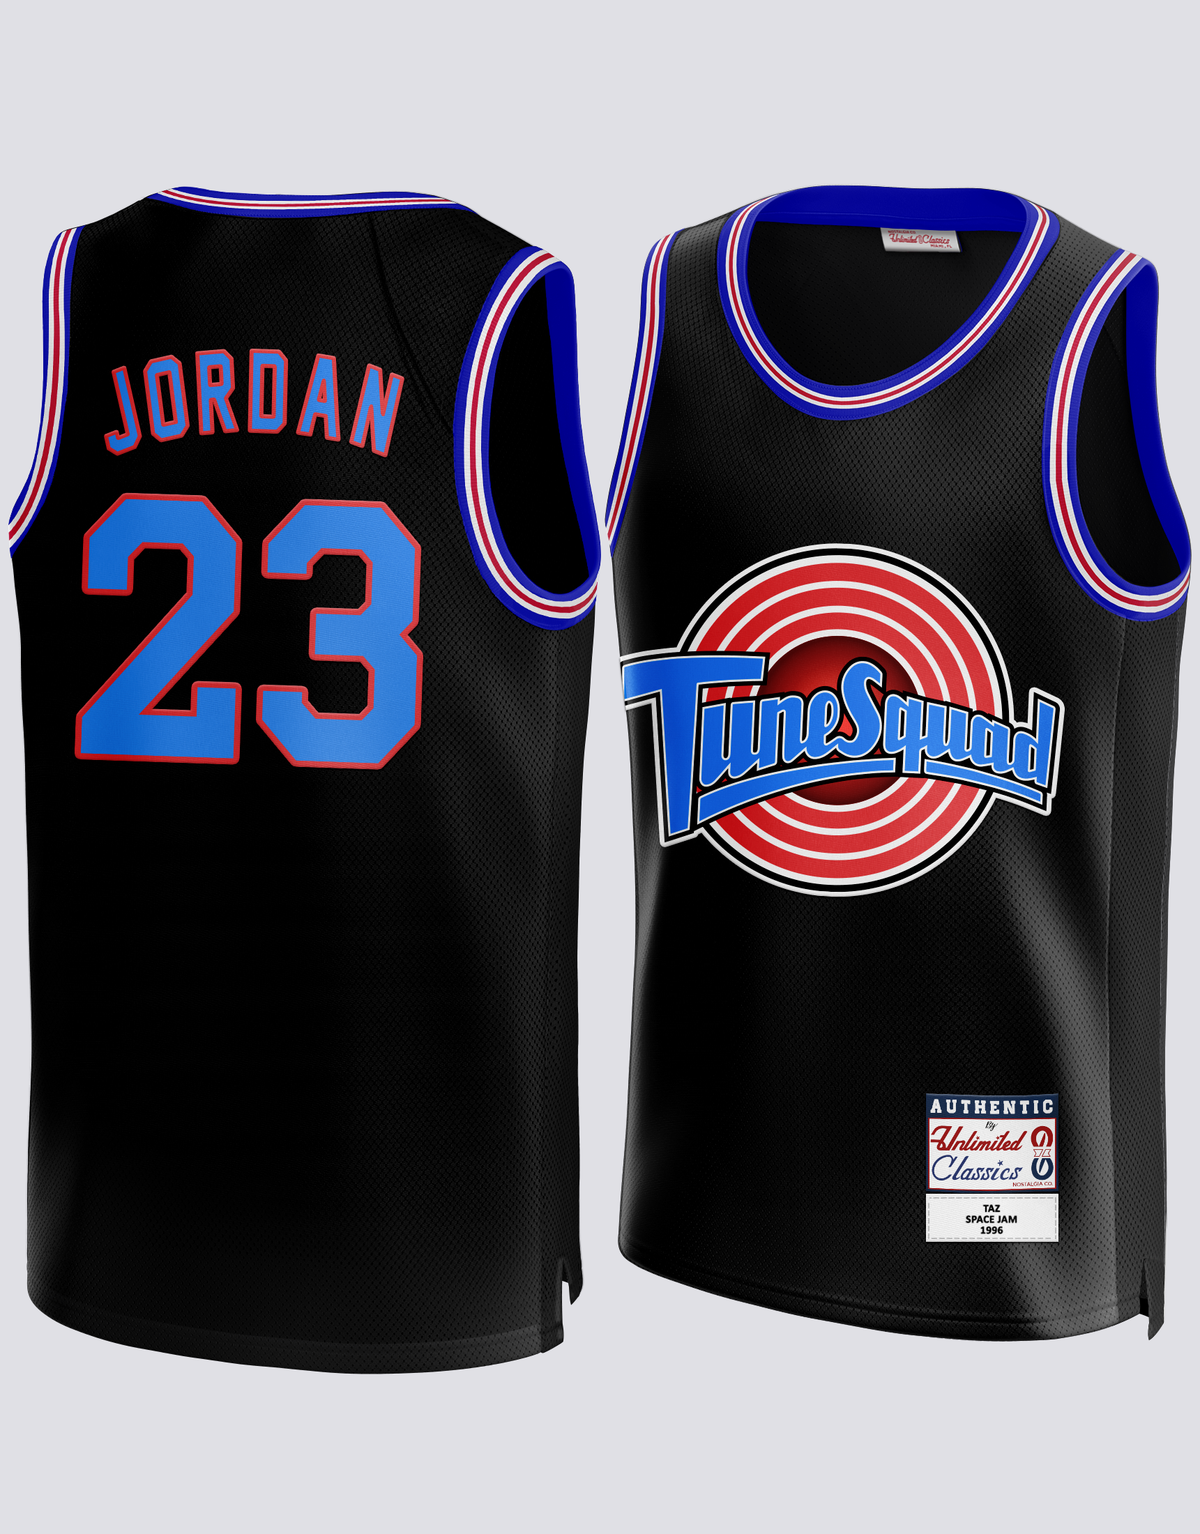 Unlimited Classics Shop Jordan #23 Space Jam Tune Squad Looney Tunes Basketball Jersey 2XL